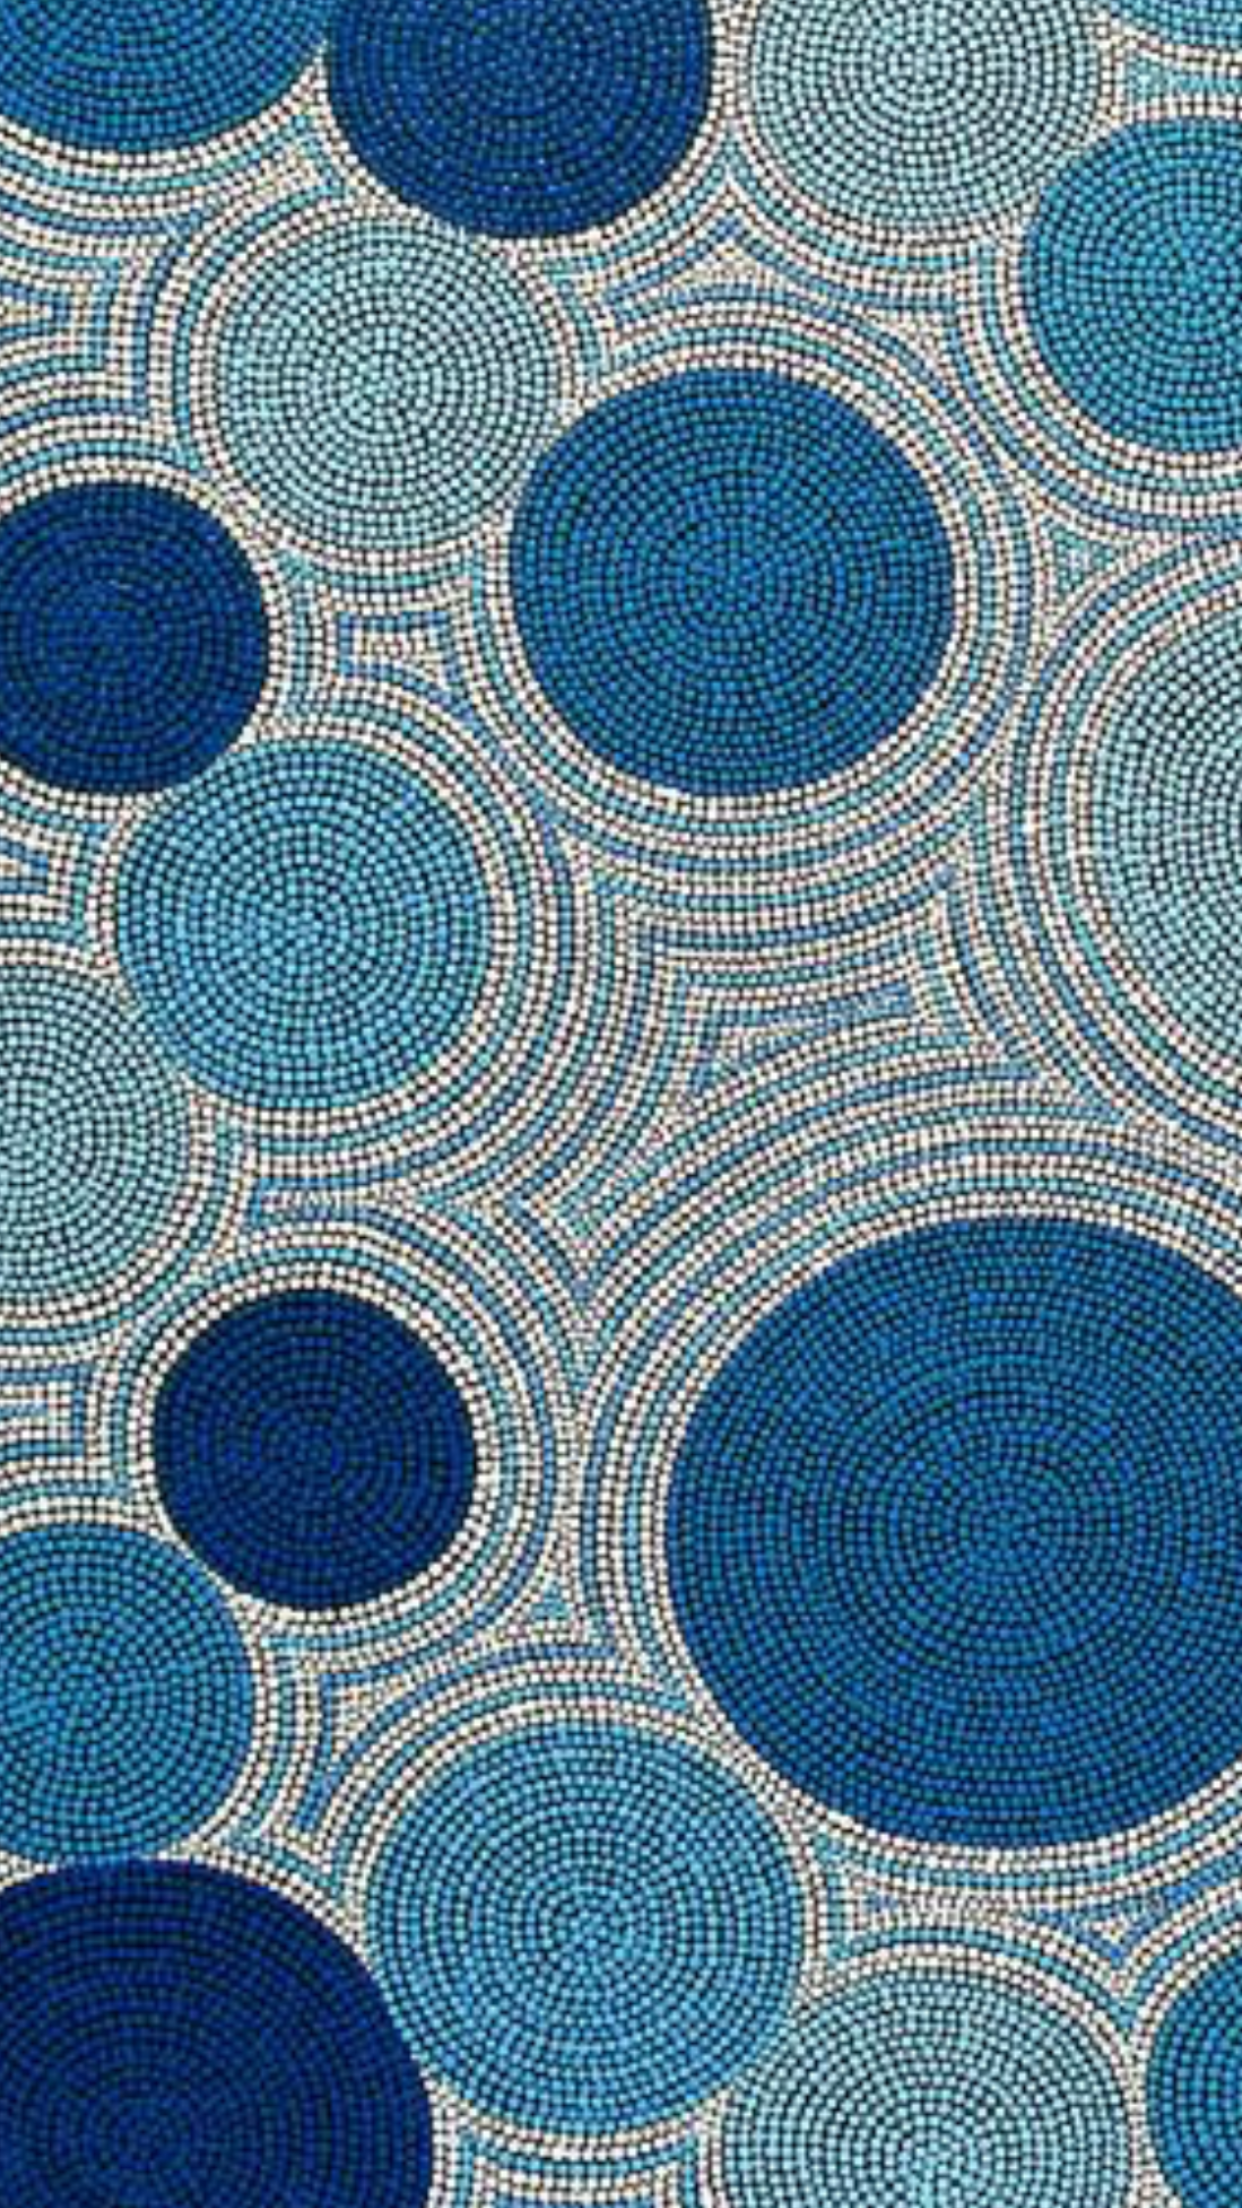 Pin By Cindy Lau On Fractal Art Wallpaper II. Mosaic Drawing, Blue Mosaic, Aboriginal Art